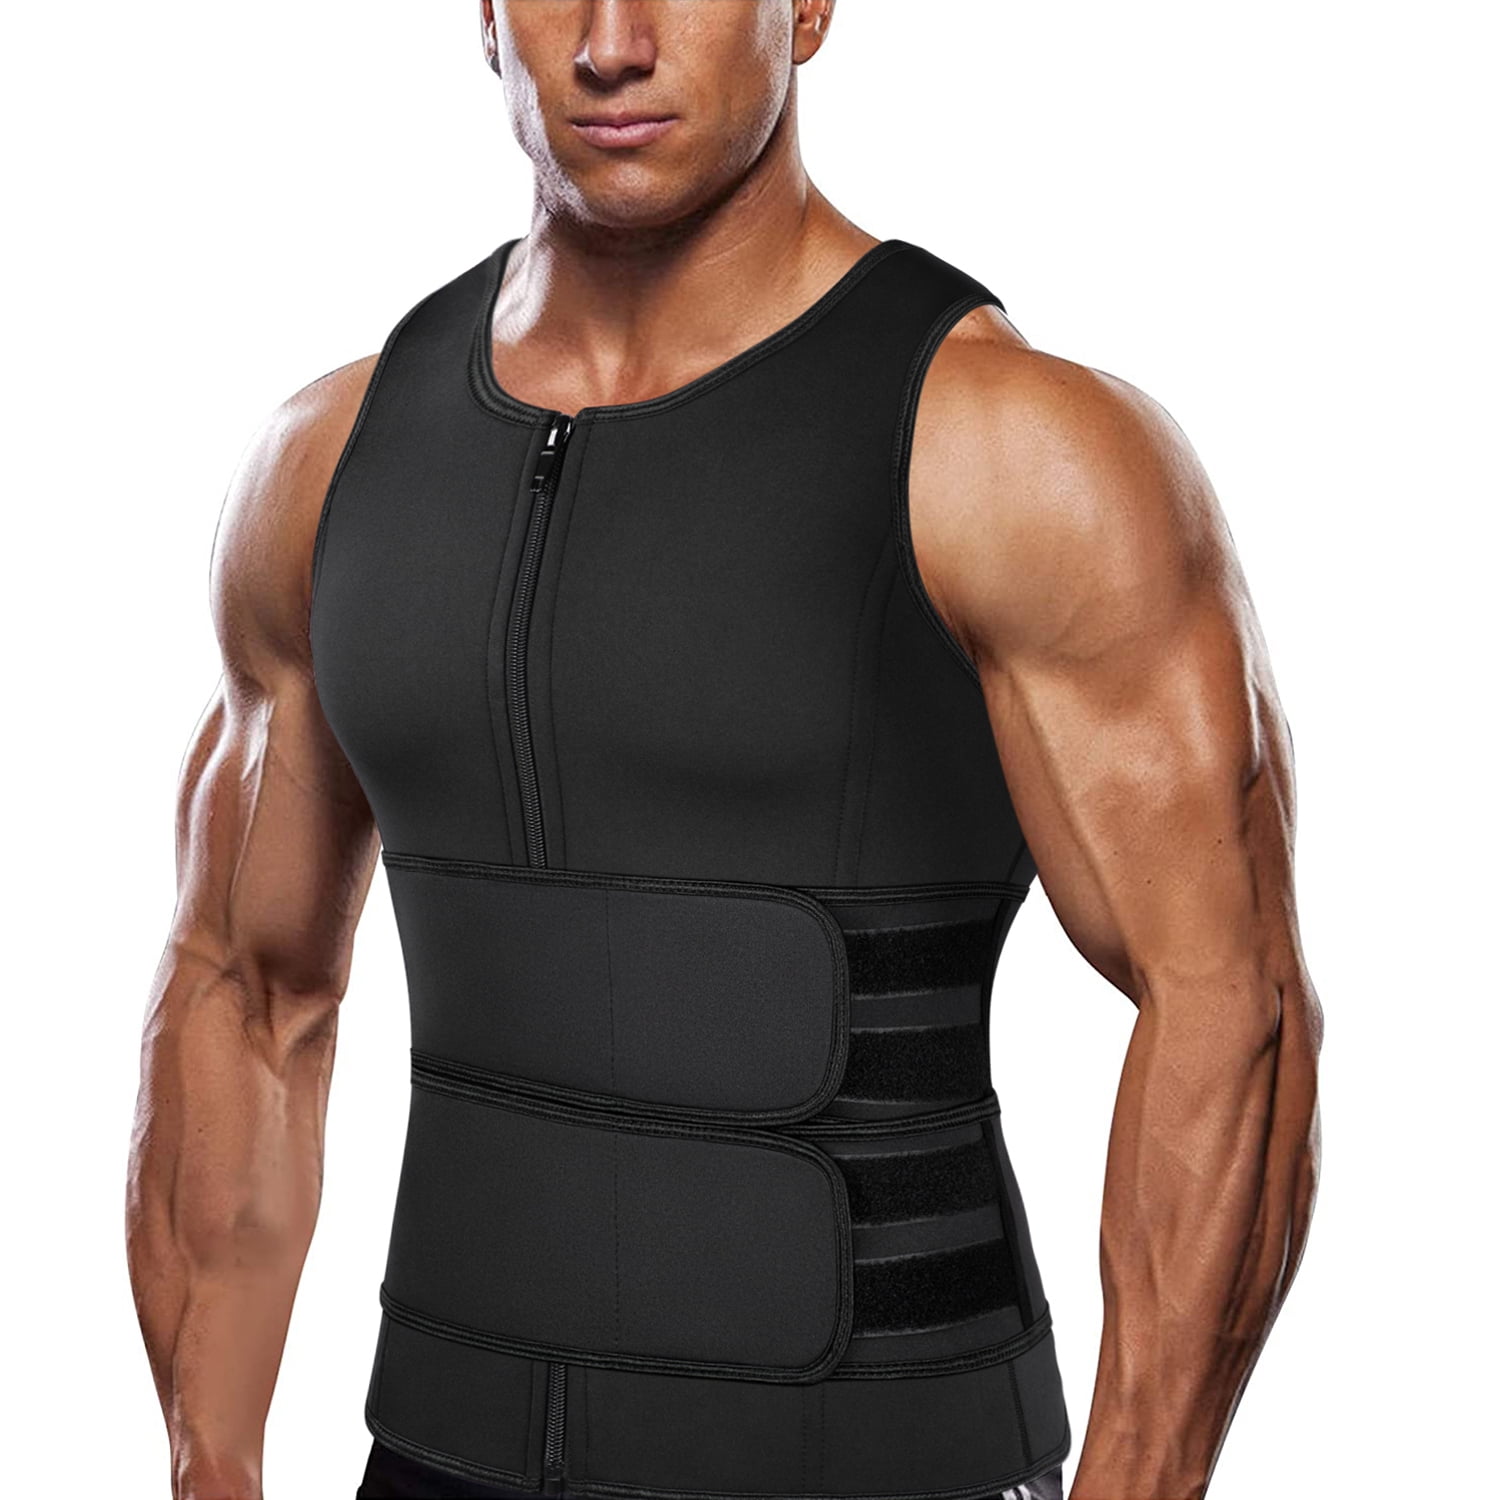 Men's Neoprene Sauna Vest Sweat Shirt Hot Redu Fat Body Shaper Gym Workout Top 